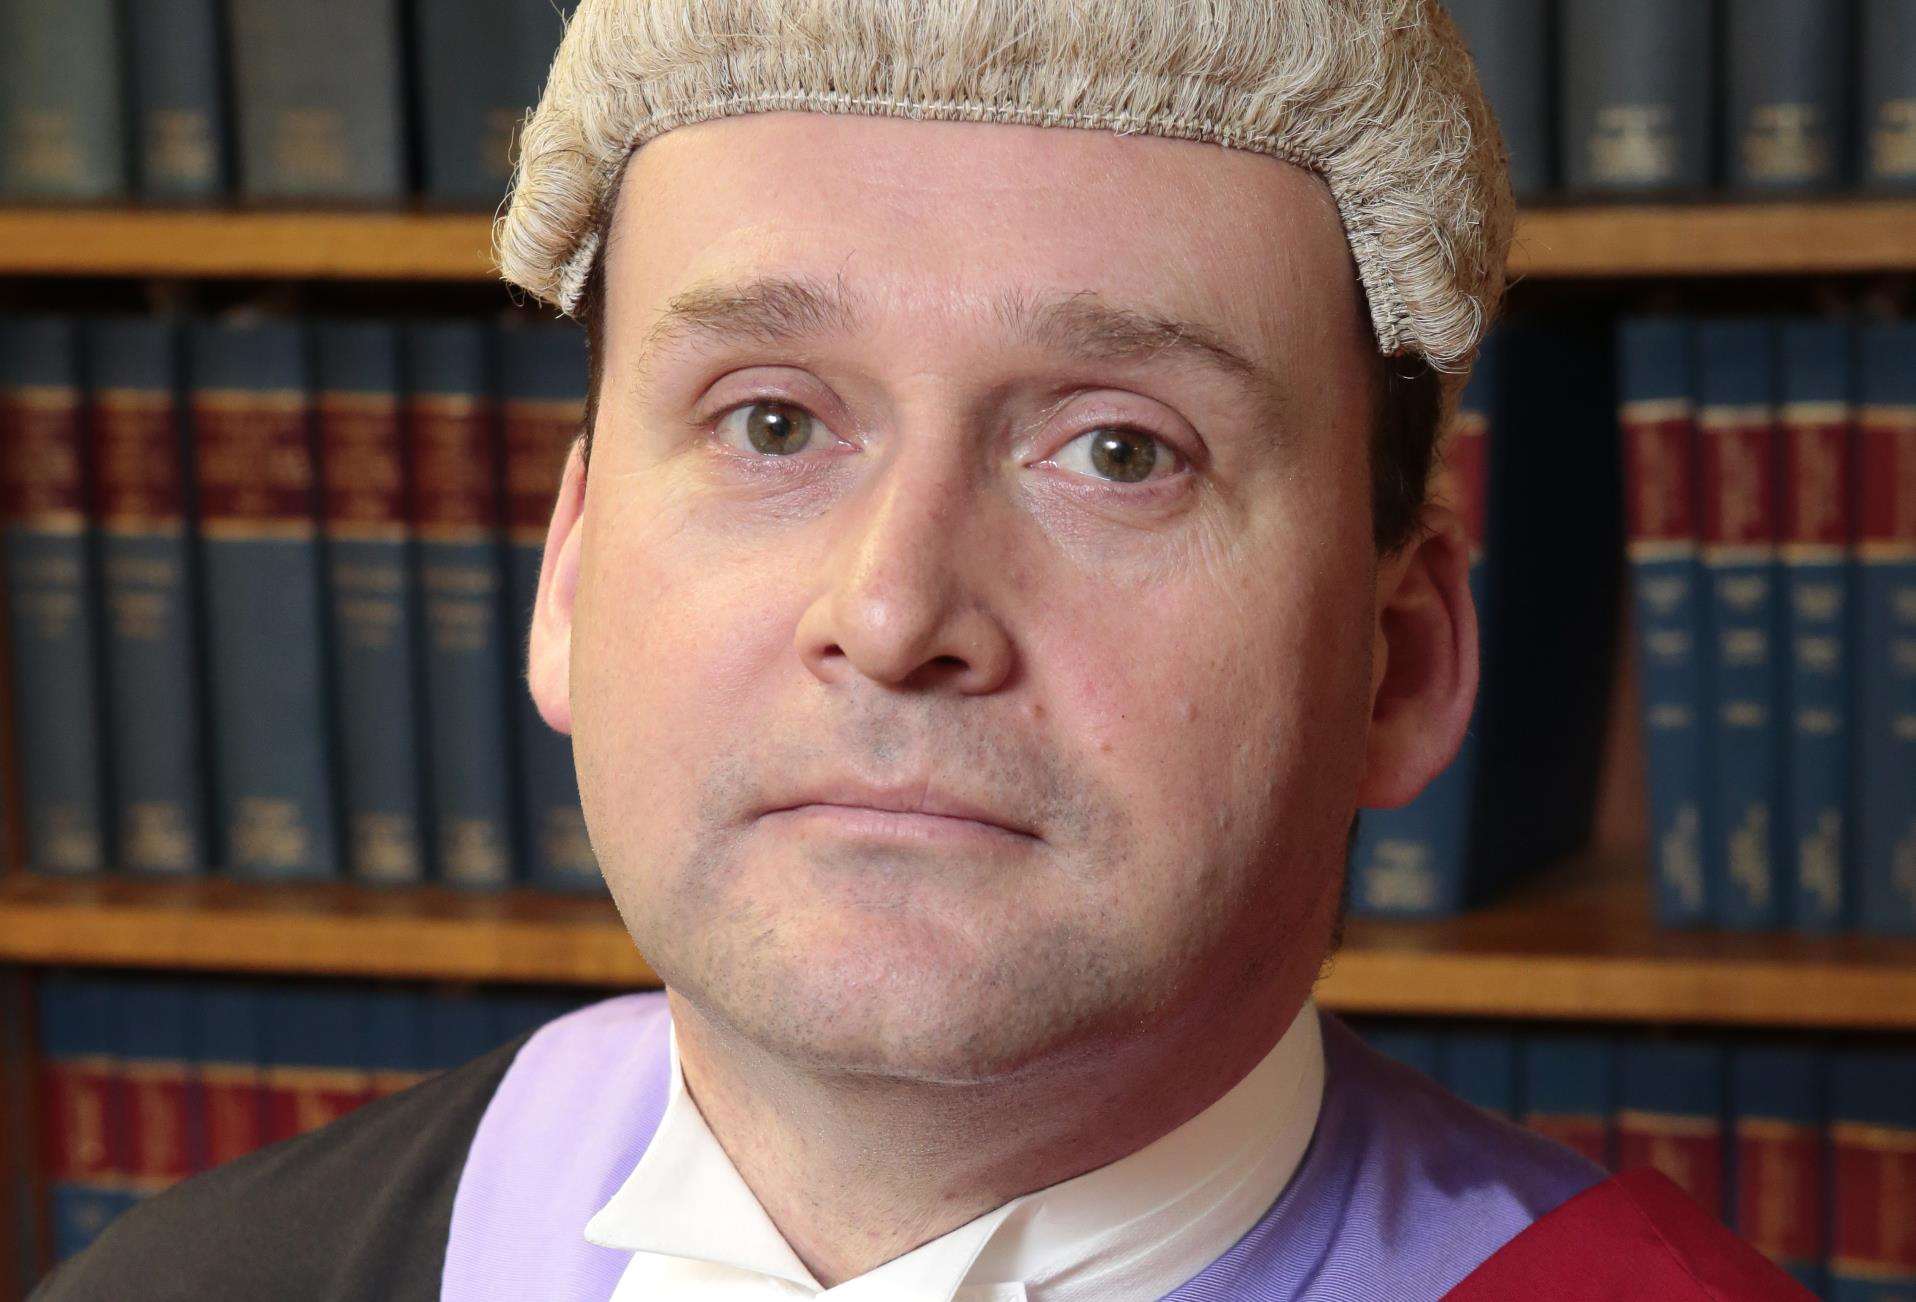 Judge Julian Smith